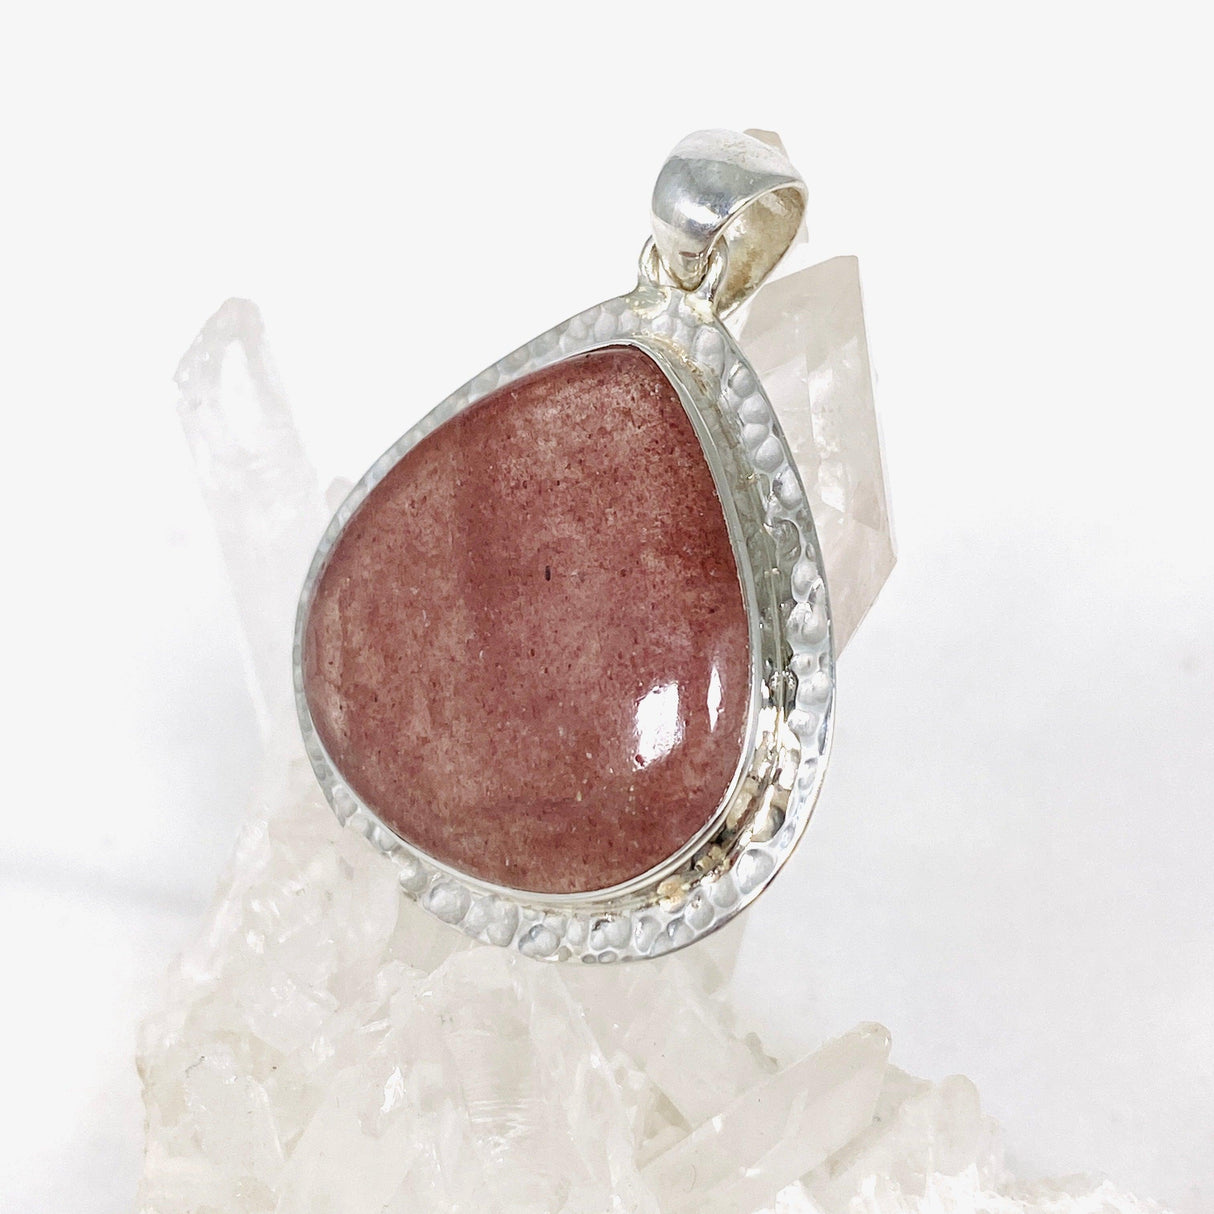 Strawberry Quartz cabochon pear pendant with hammered setting KPGJ4015 - Nature's Magick